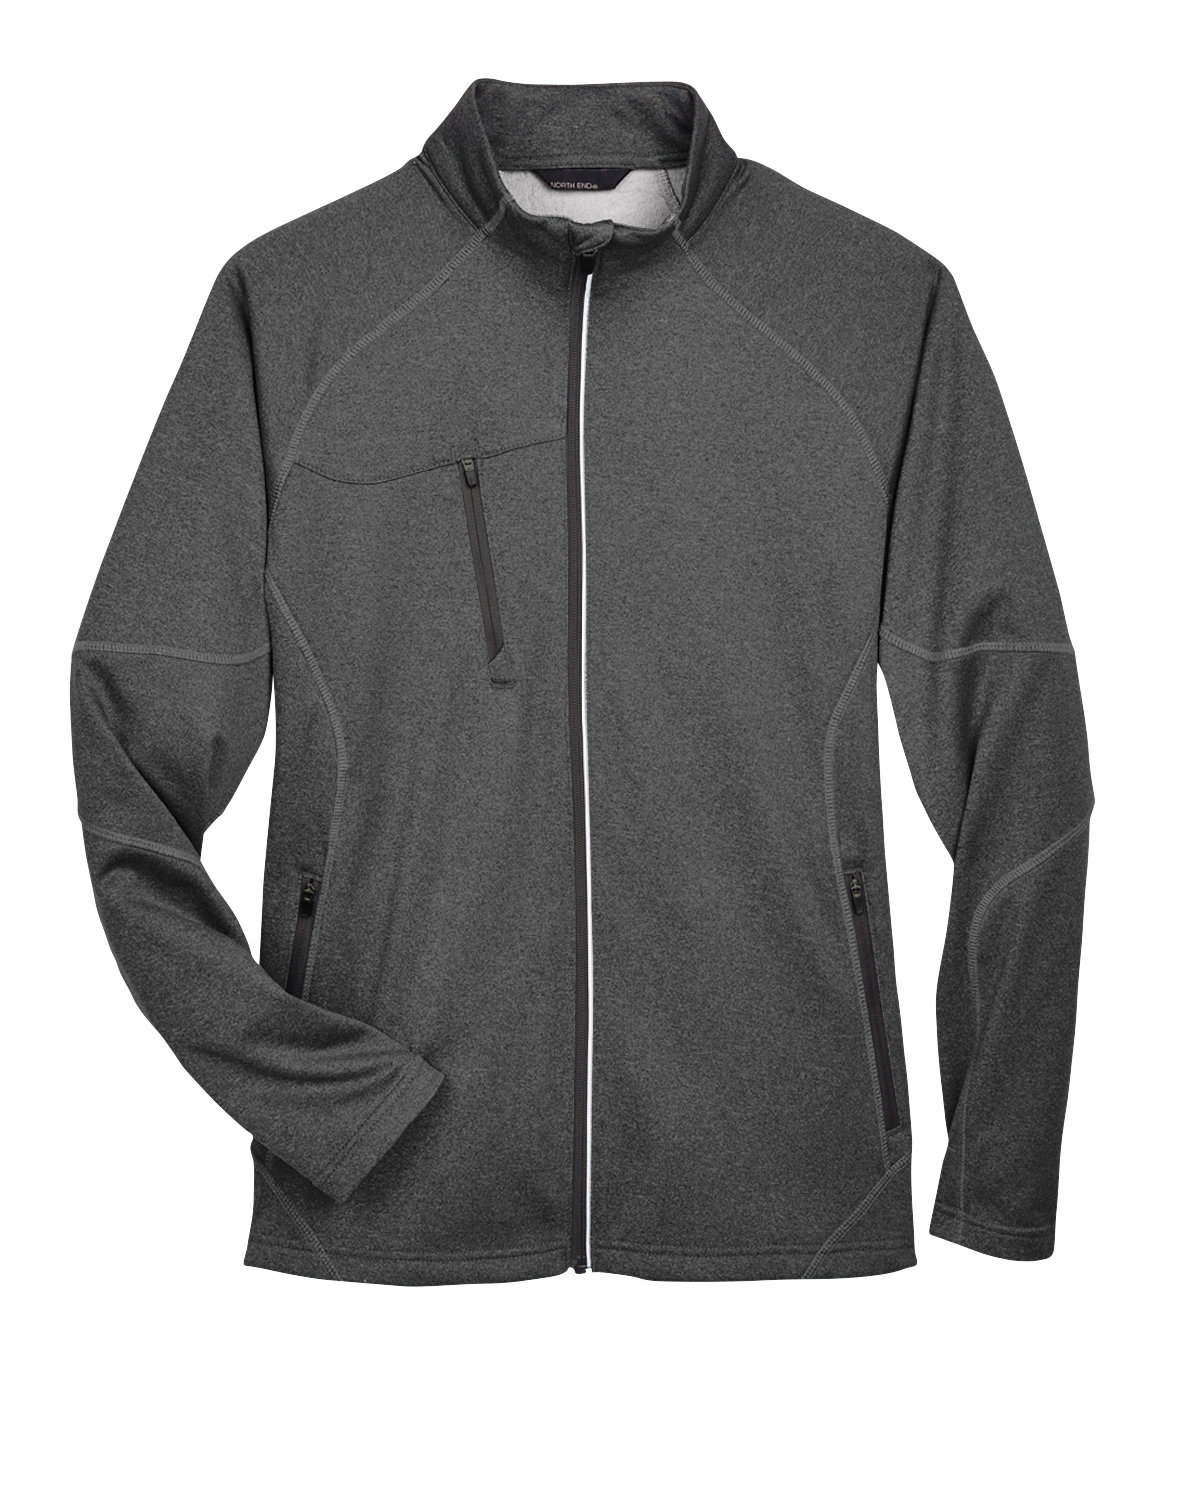 Men's jacket in melange Stretch Performance fleece